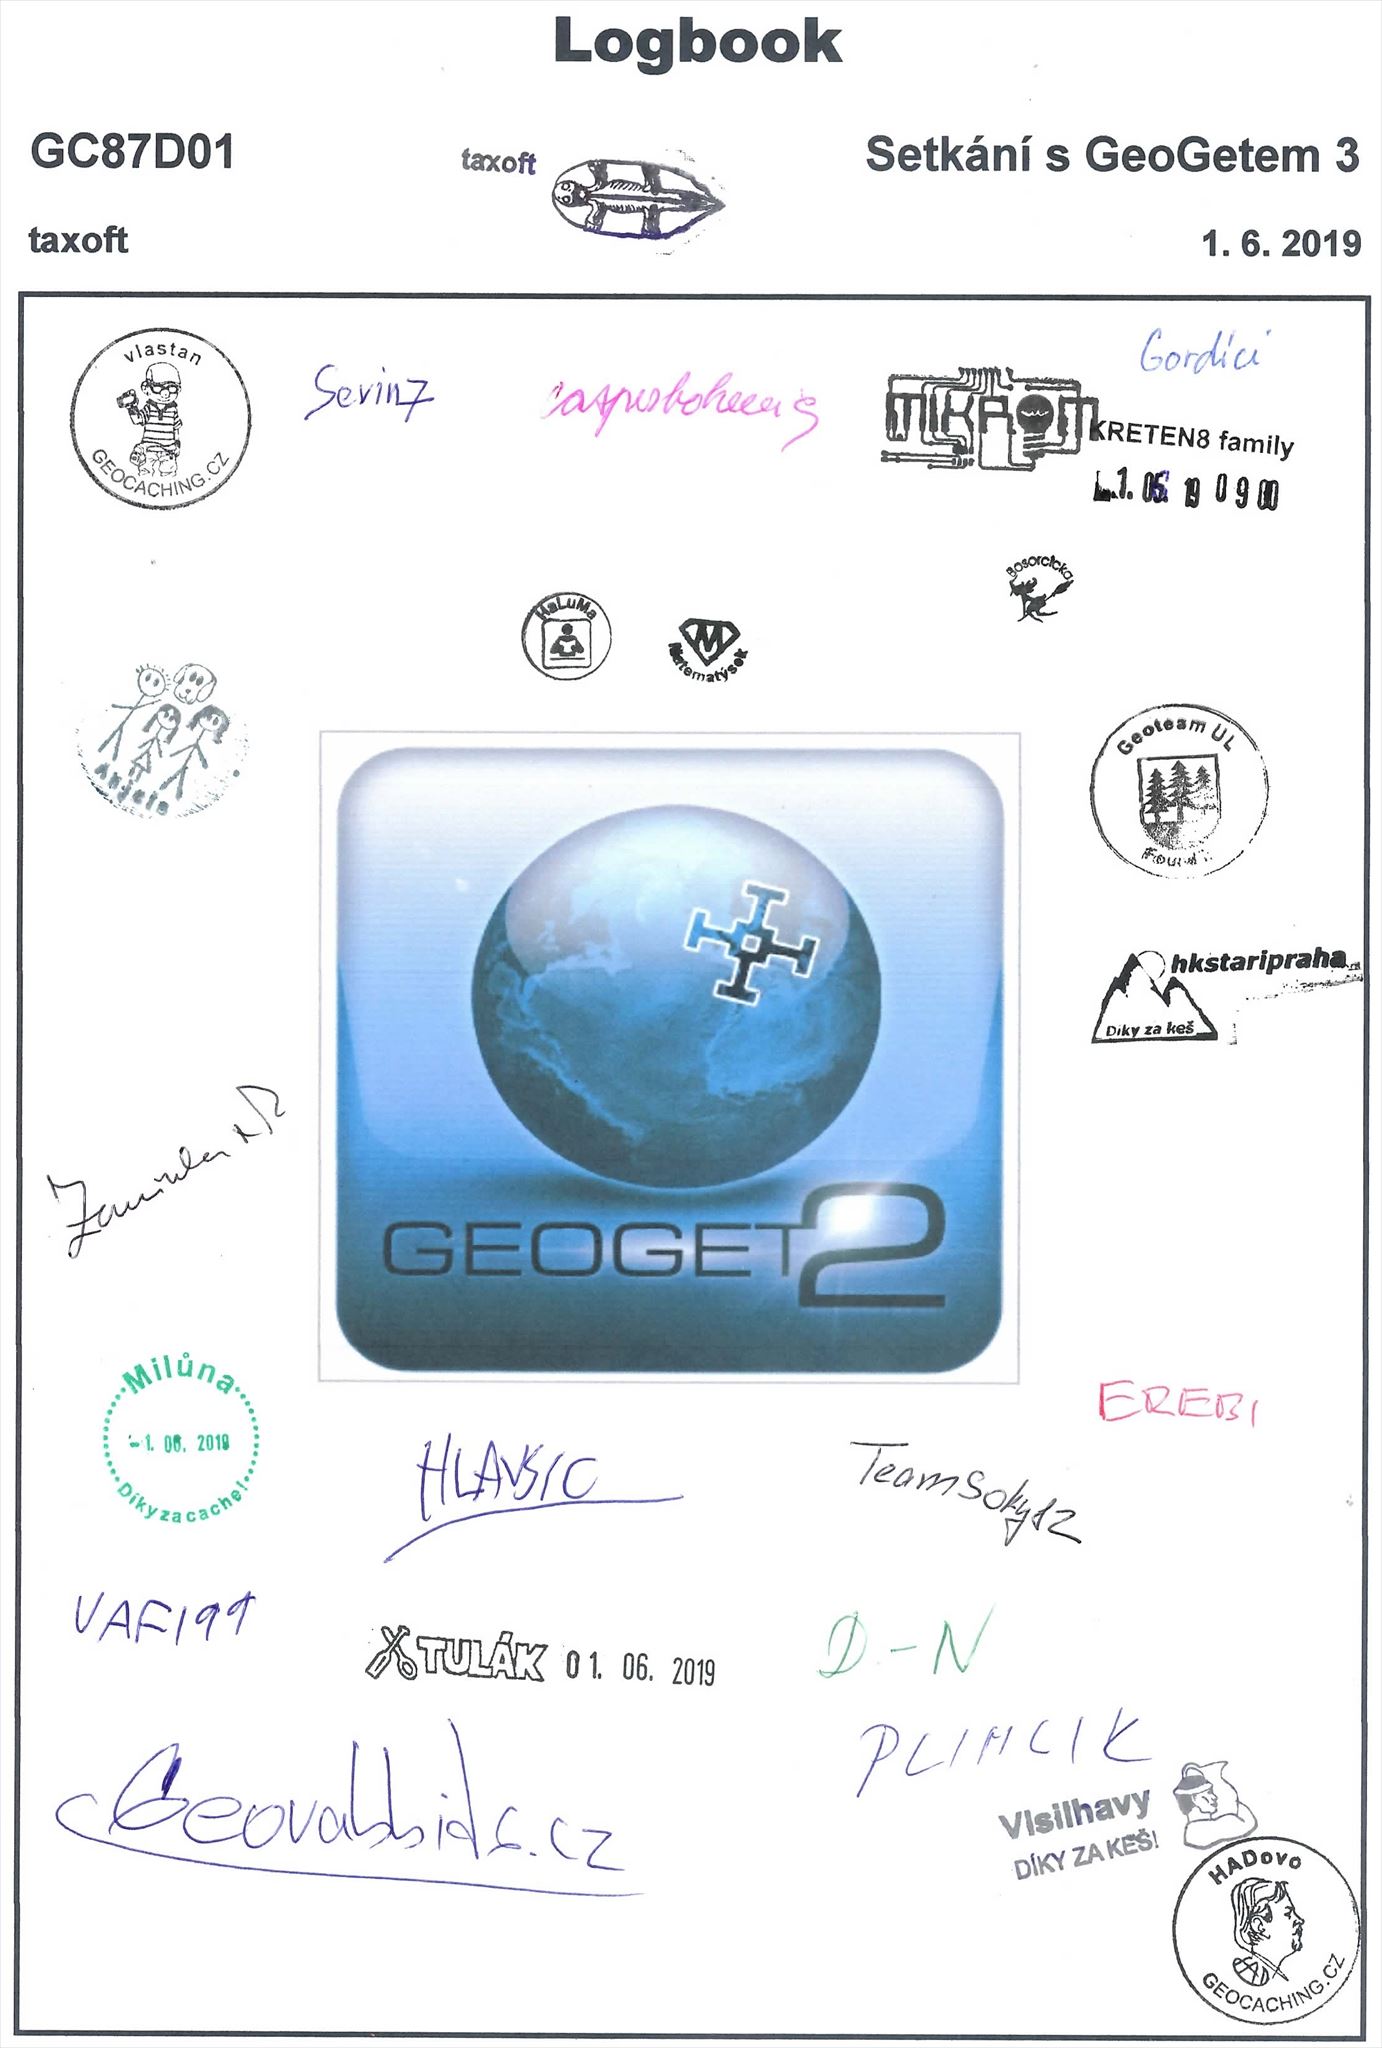 GC87D01 - Setkání s GeoGetem 3 - logbook